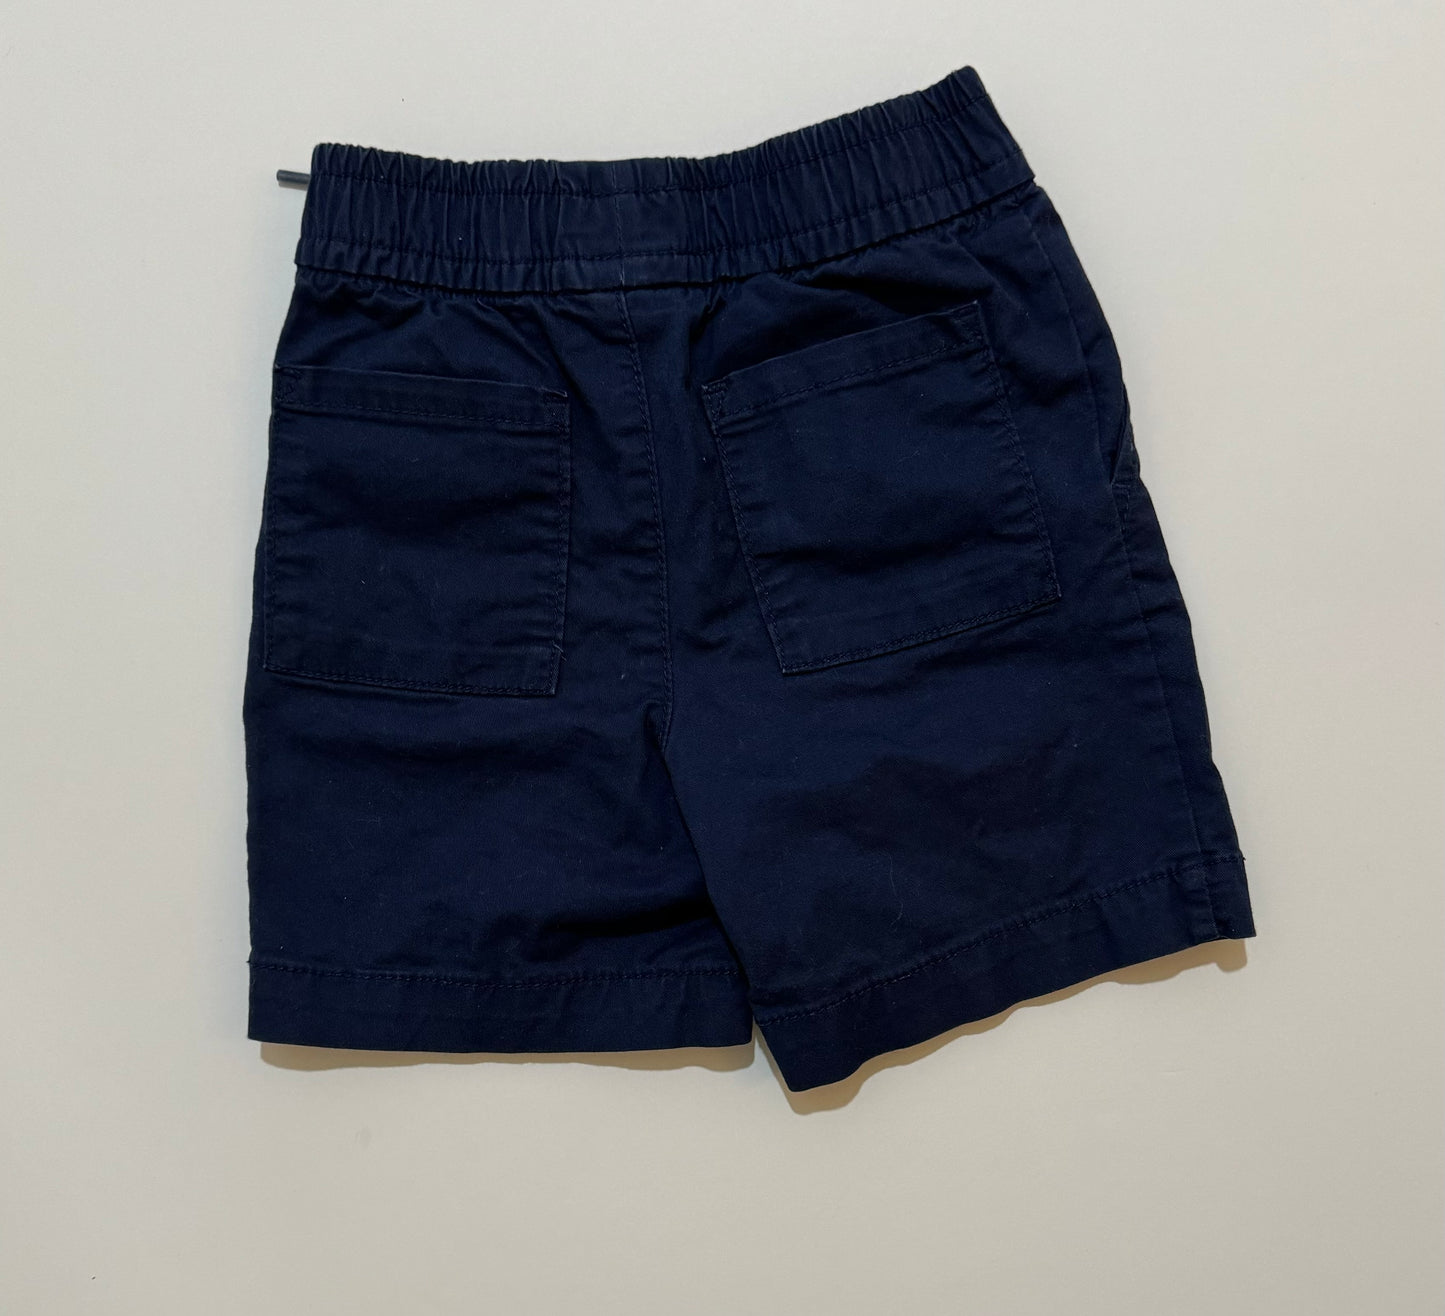 2T Boys Gap Navy Blue Shorts